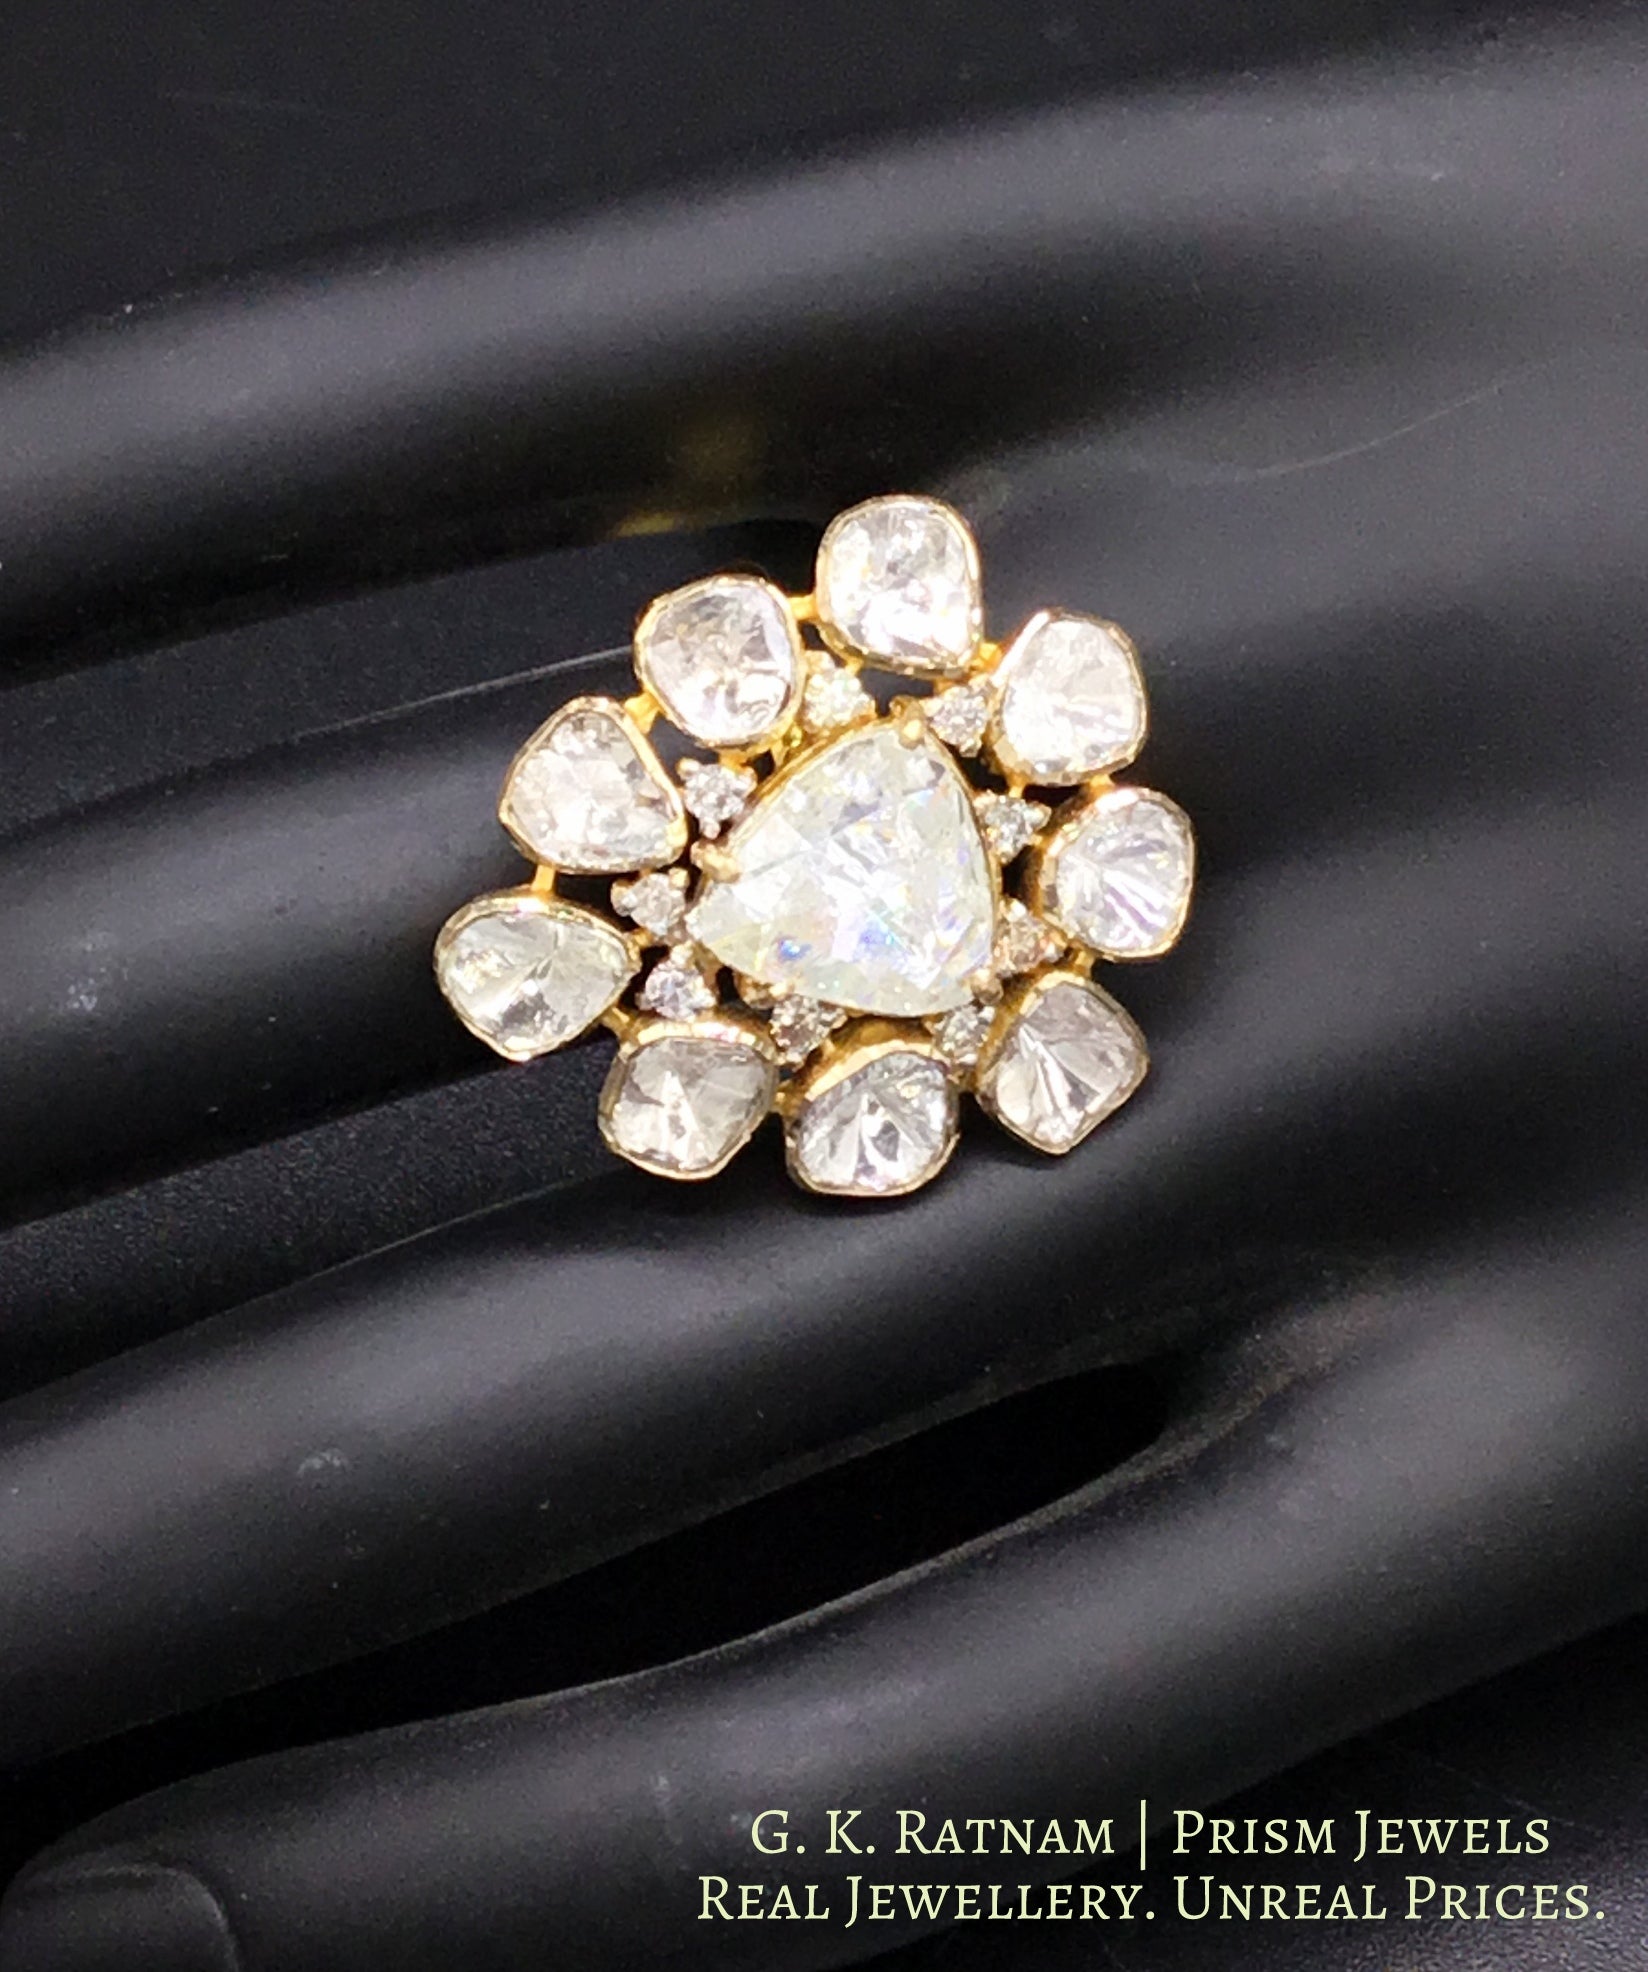 18k Gold and Diamond Polki pear-shaped Ring with English Polki Center - gold diamond polki kundan meena jadau jewellery